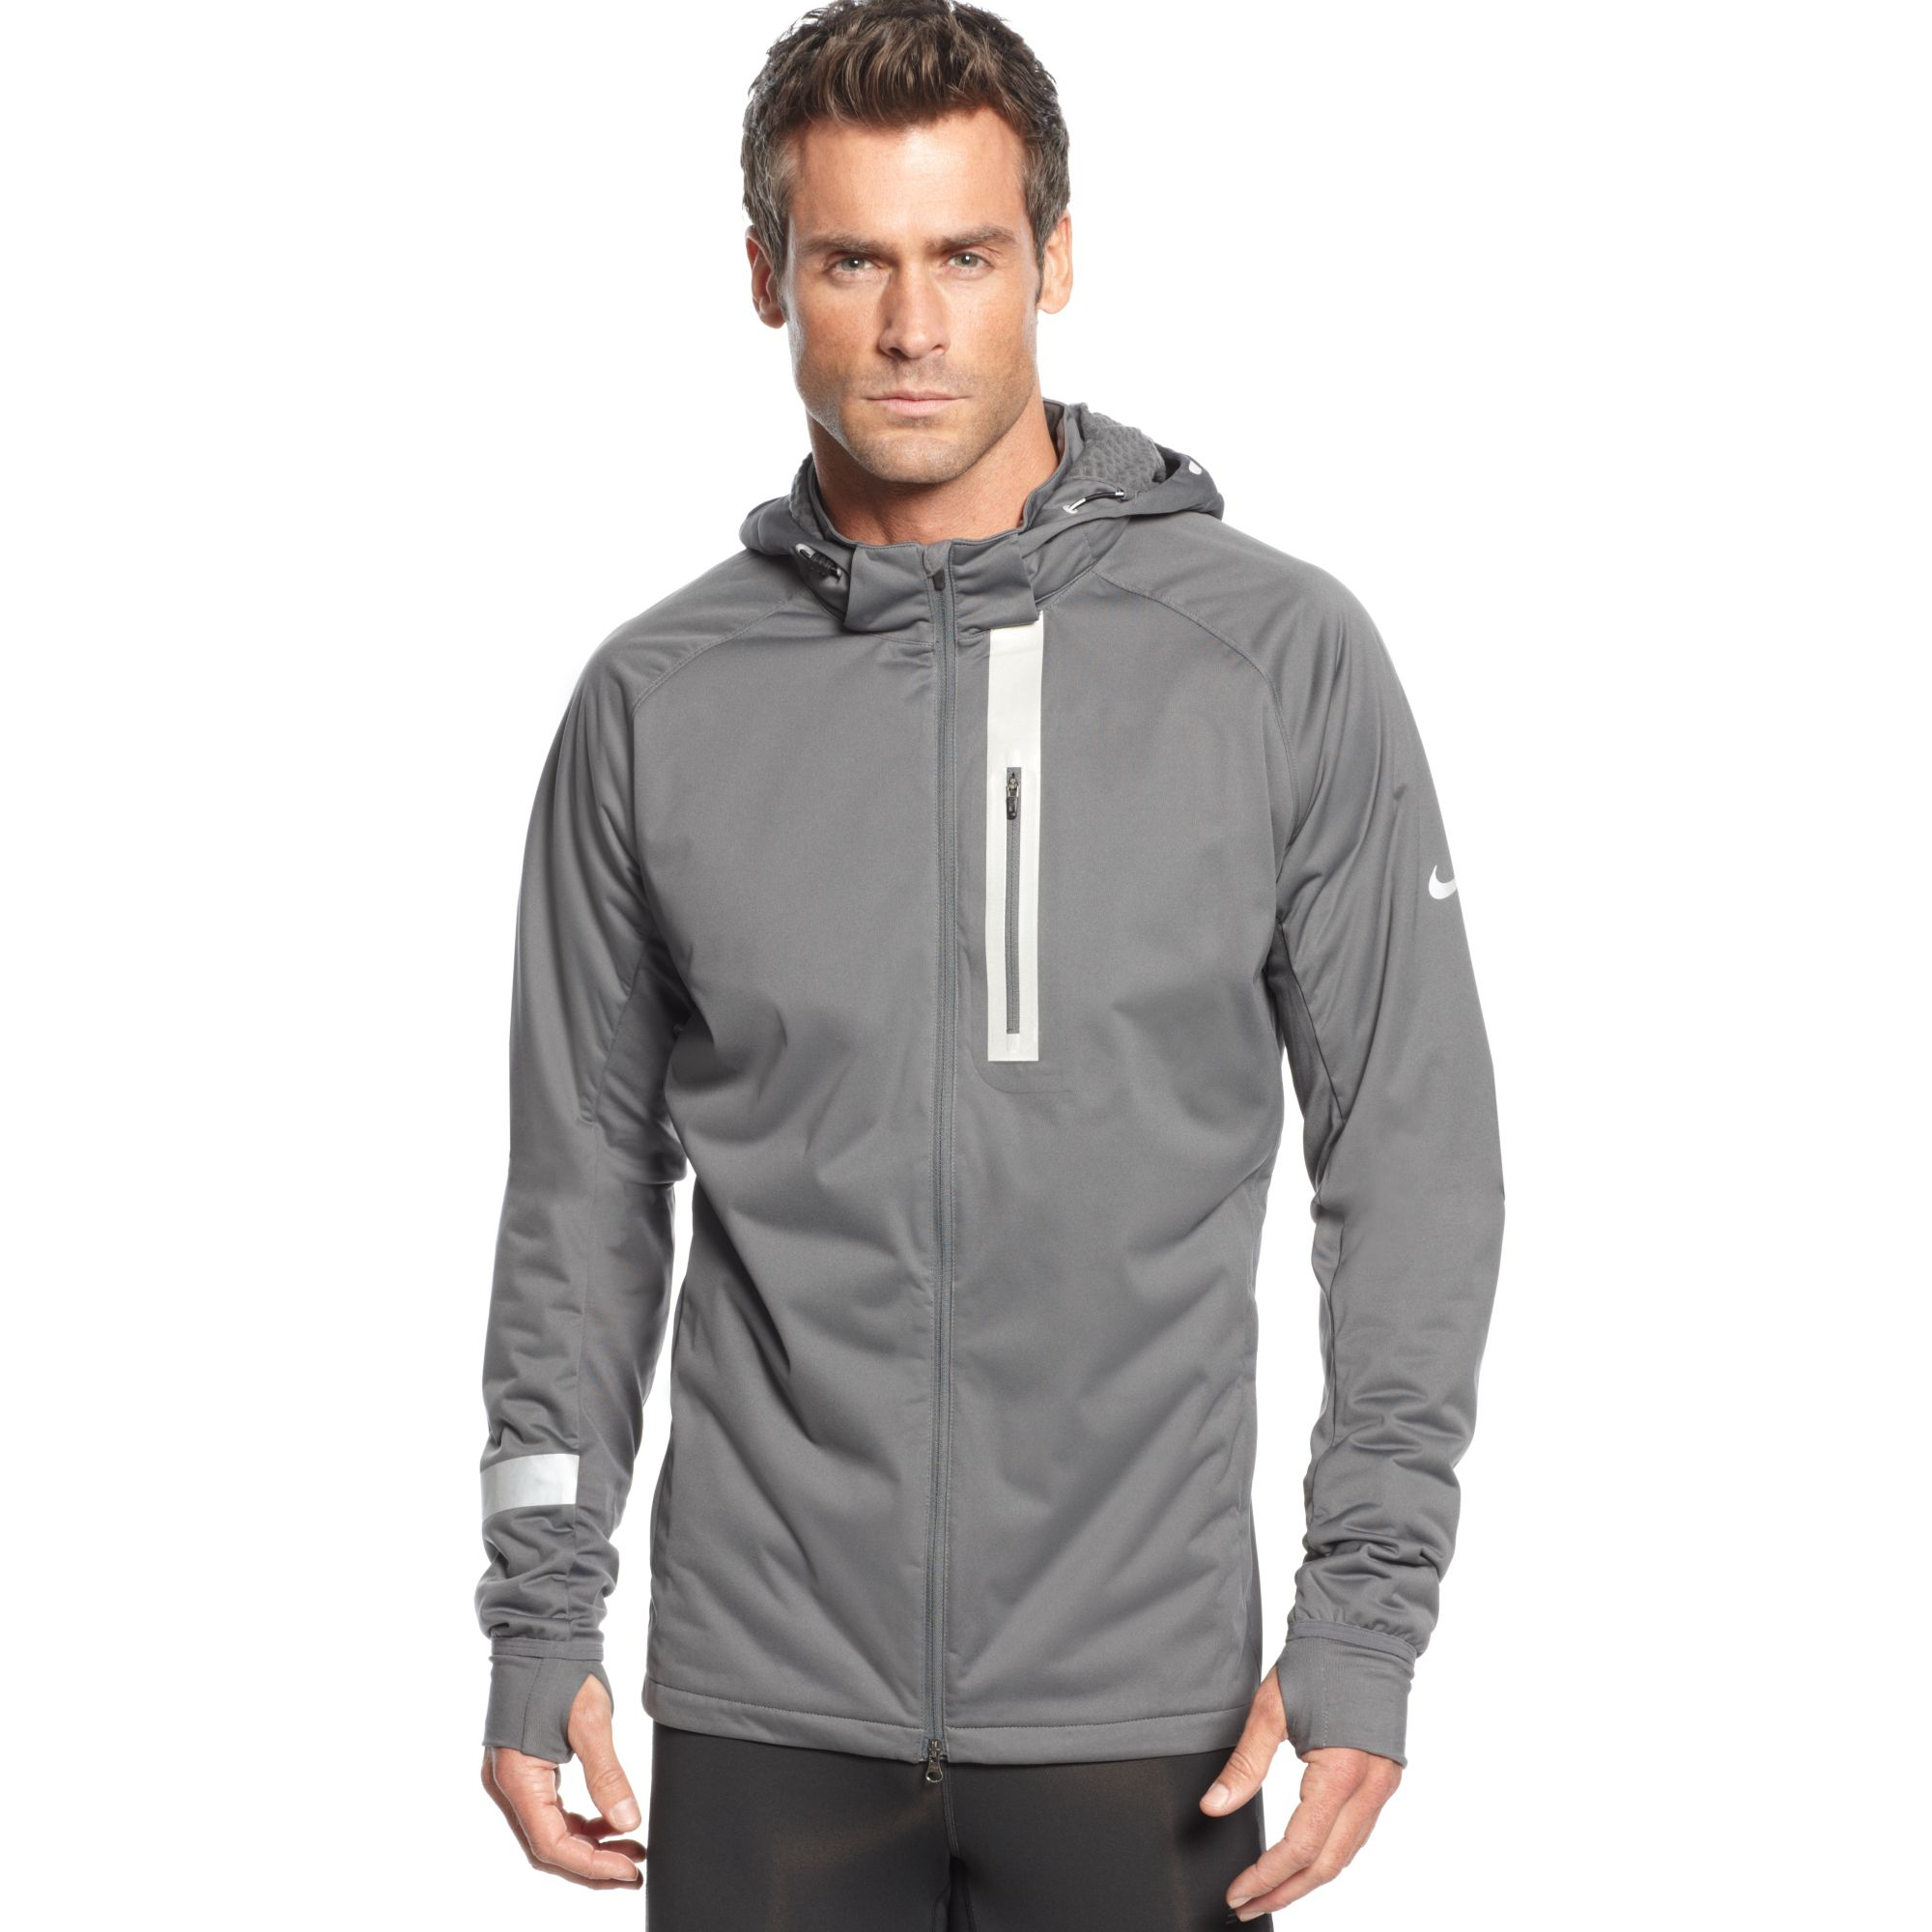 Nike Element Shield Max Hooded Jacket in Dark Grey (Gray) for Men - Lyst